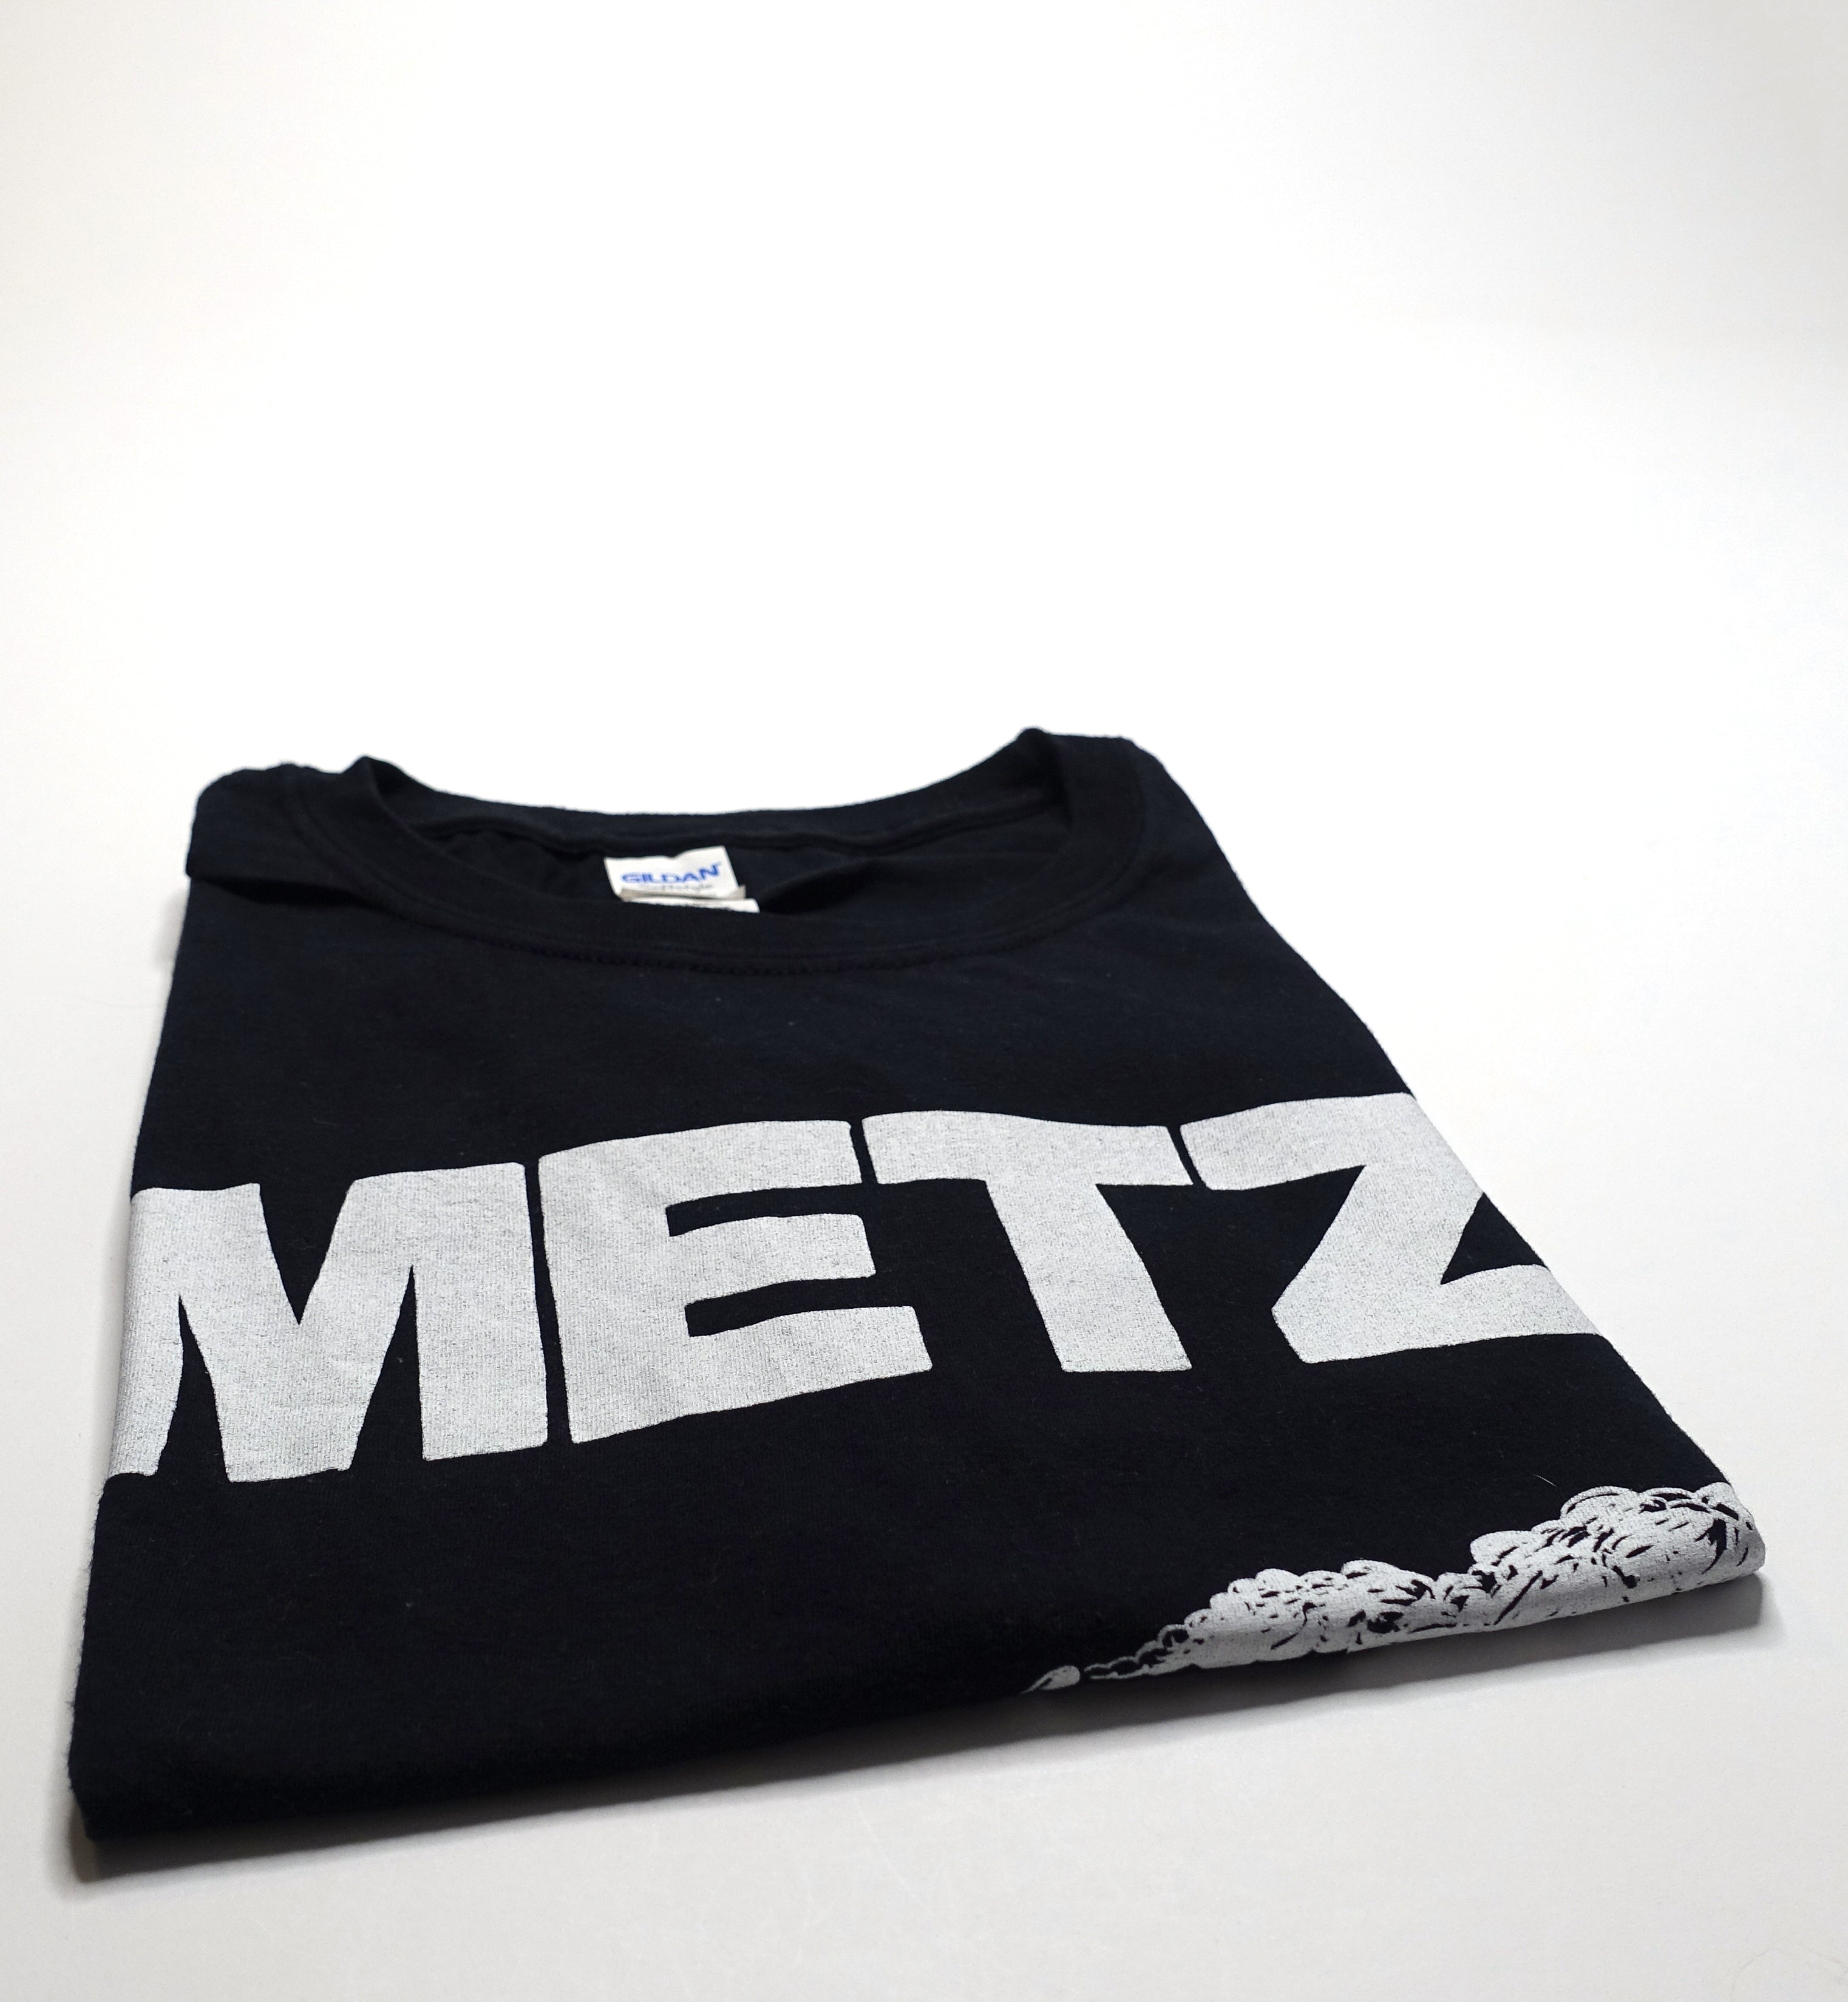 METZ - Smiley Face Dozer 2017 Tour Shirt Size Large